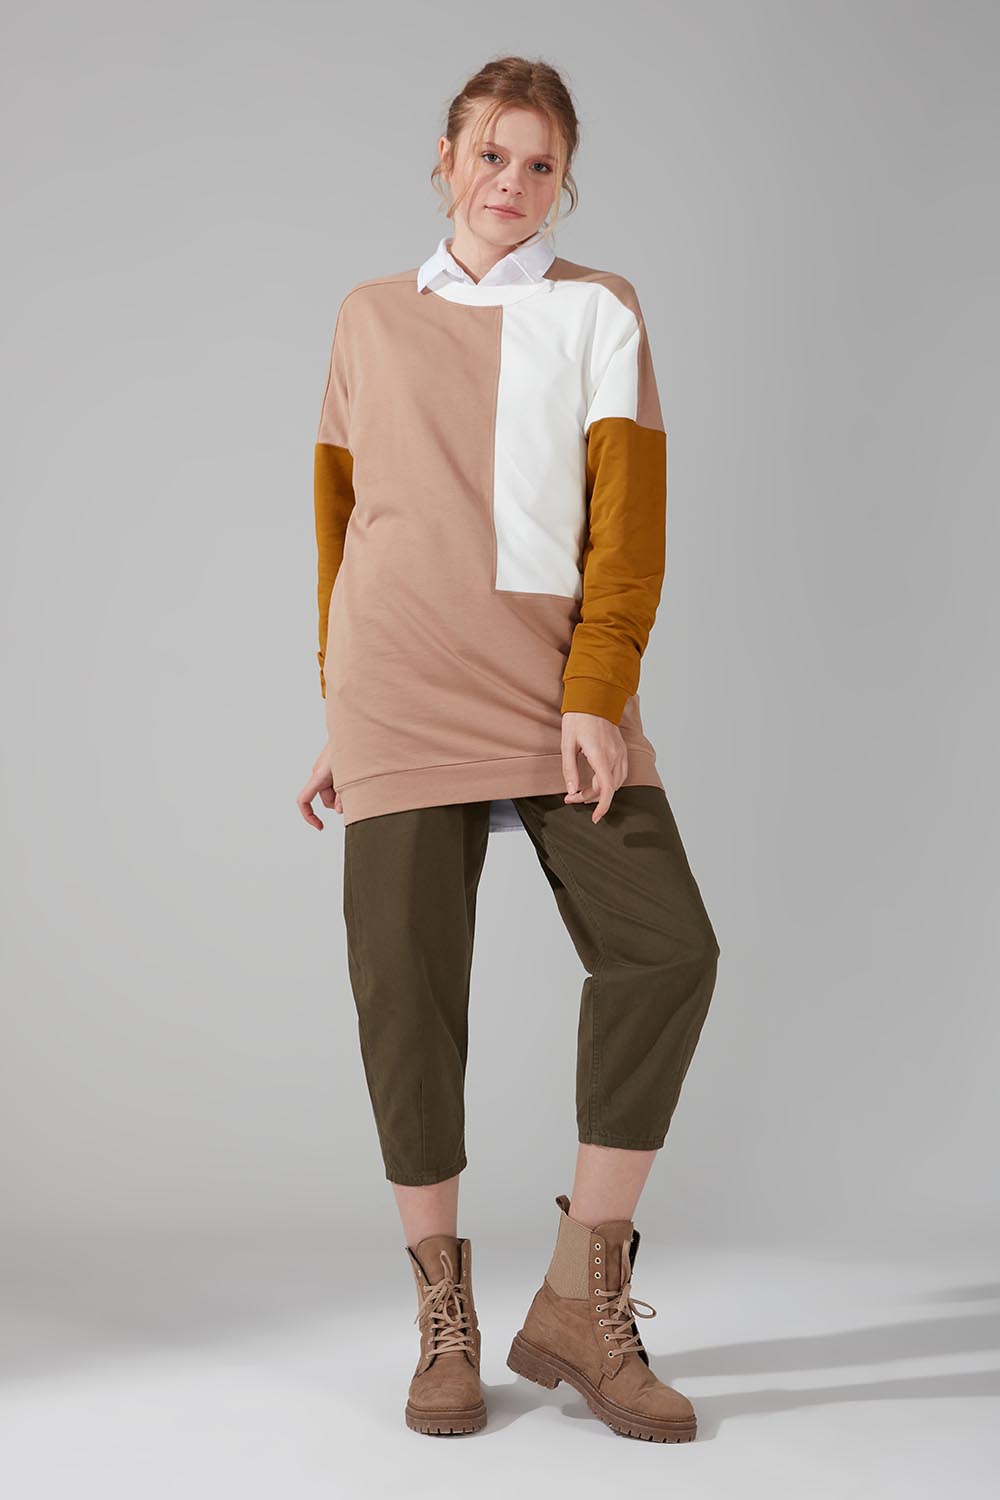 Mizalle - Colorful Sweatshirt (Beige)